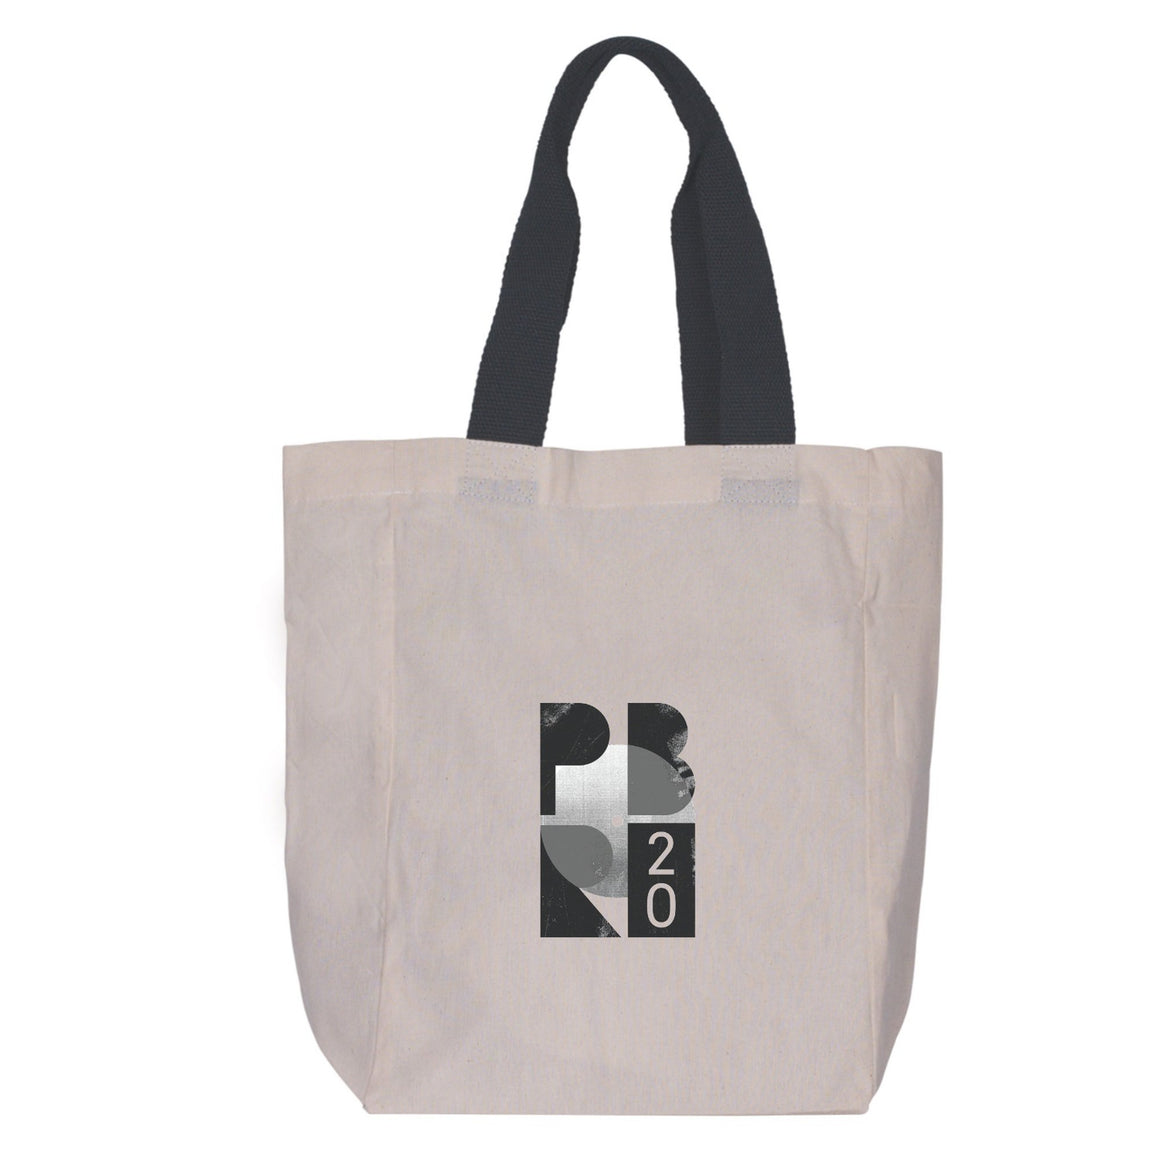 Paper Bag Records' 20th Anniversary Tote Bag